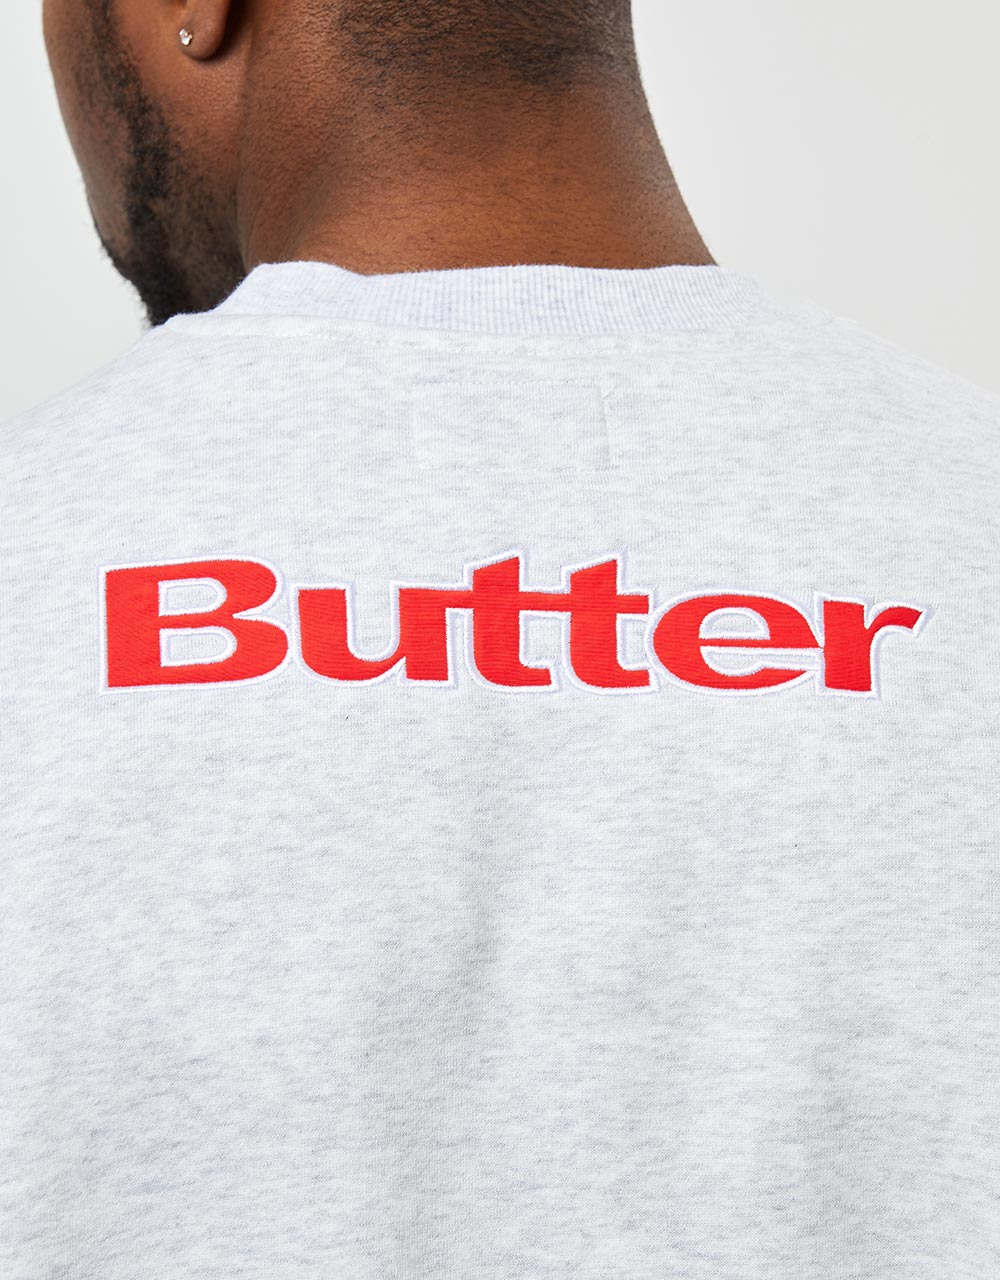 Butter Goods x Disney Fantasia Crewneck Sweatshirt - Ash Grey